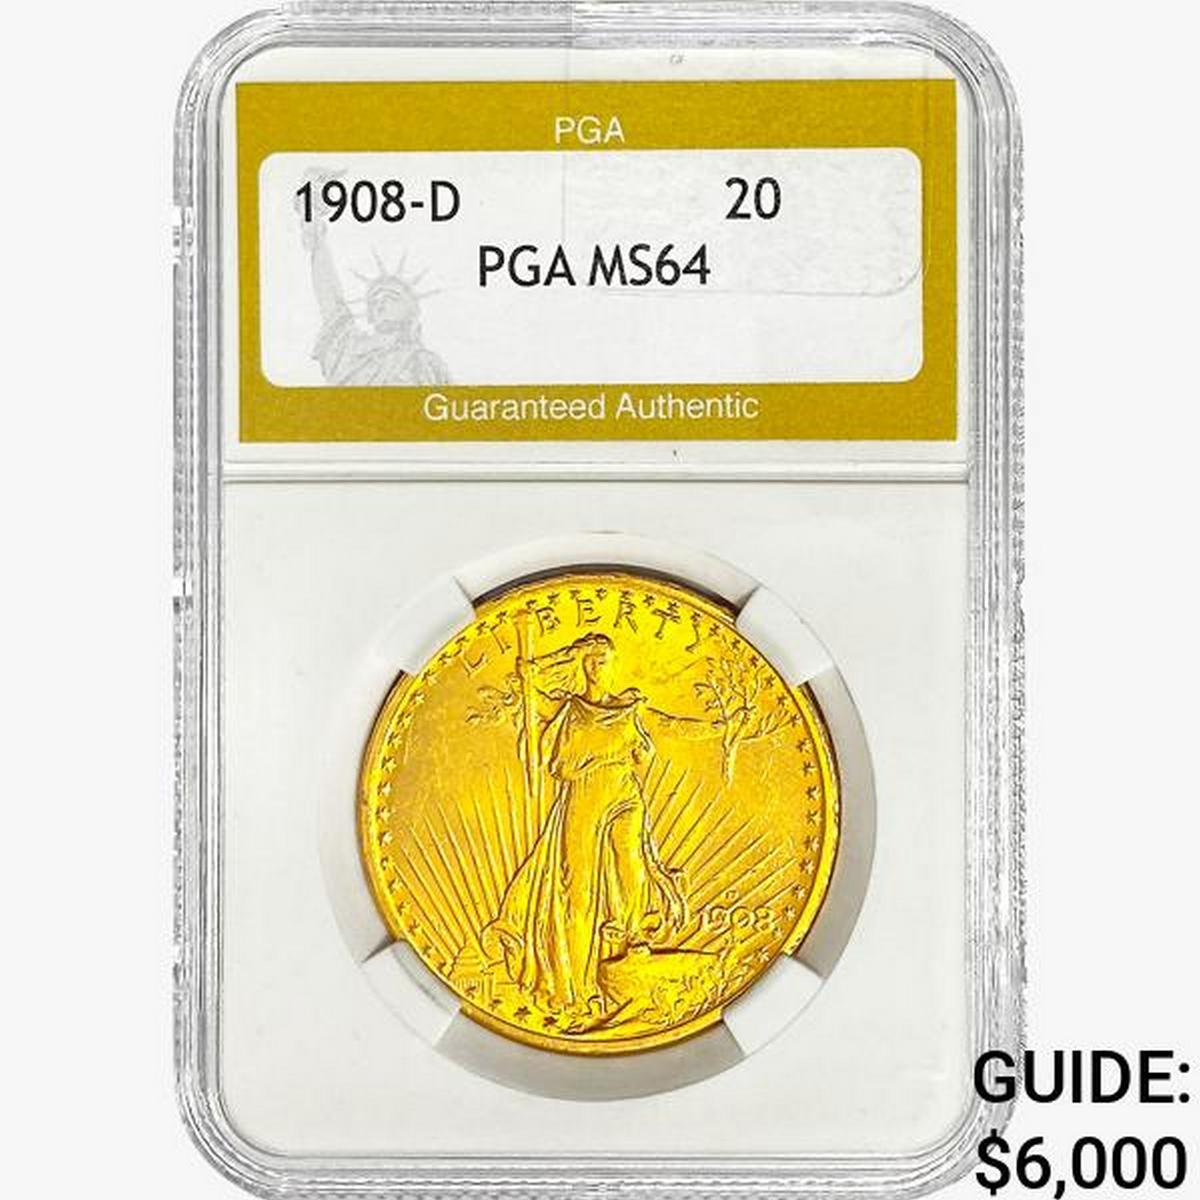 1908-D $20 Gold Double Eagle PGA MS64